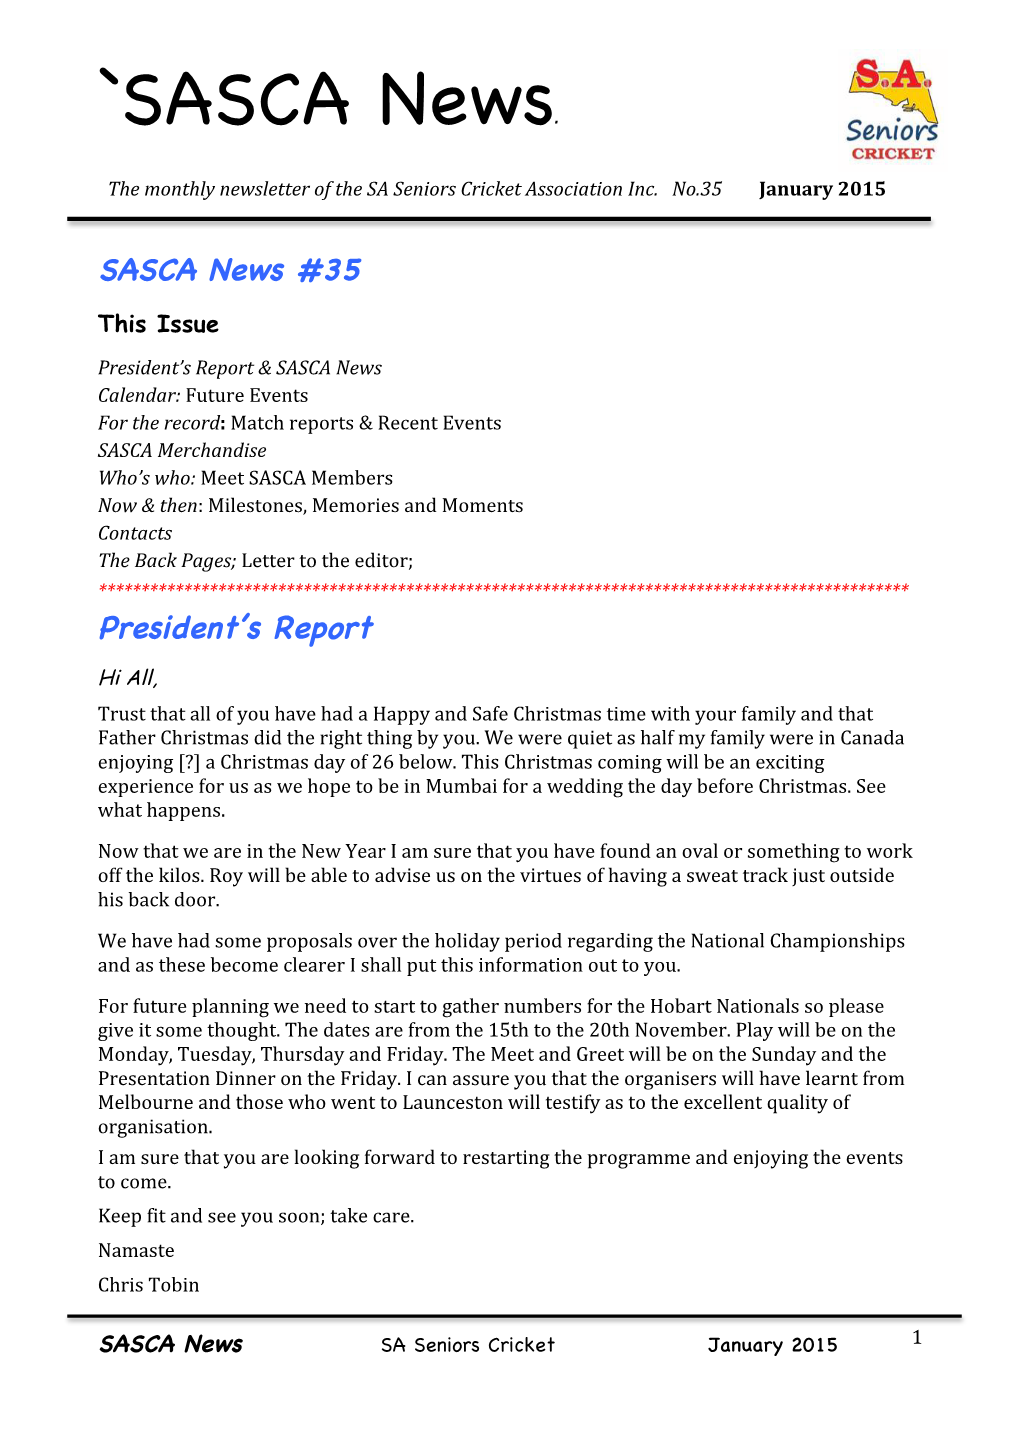 SASCA News #35 President's Report